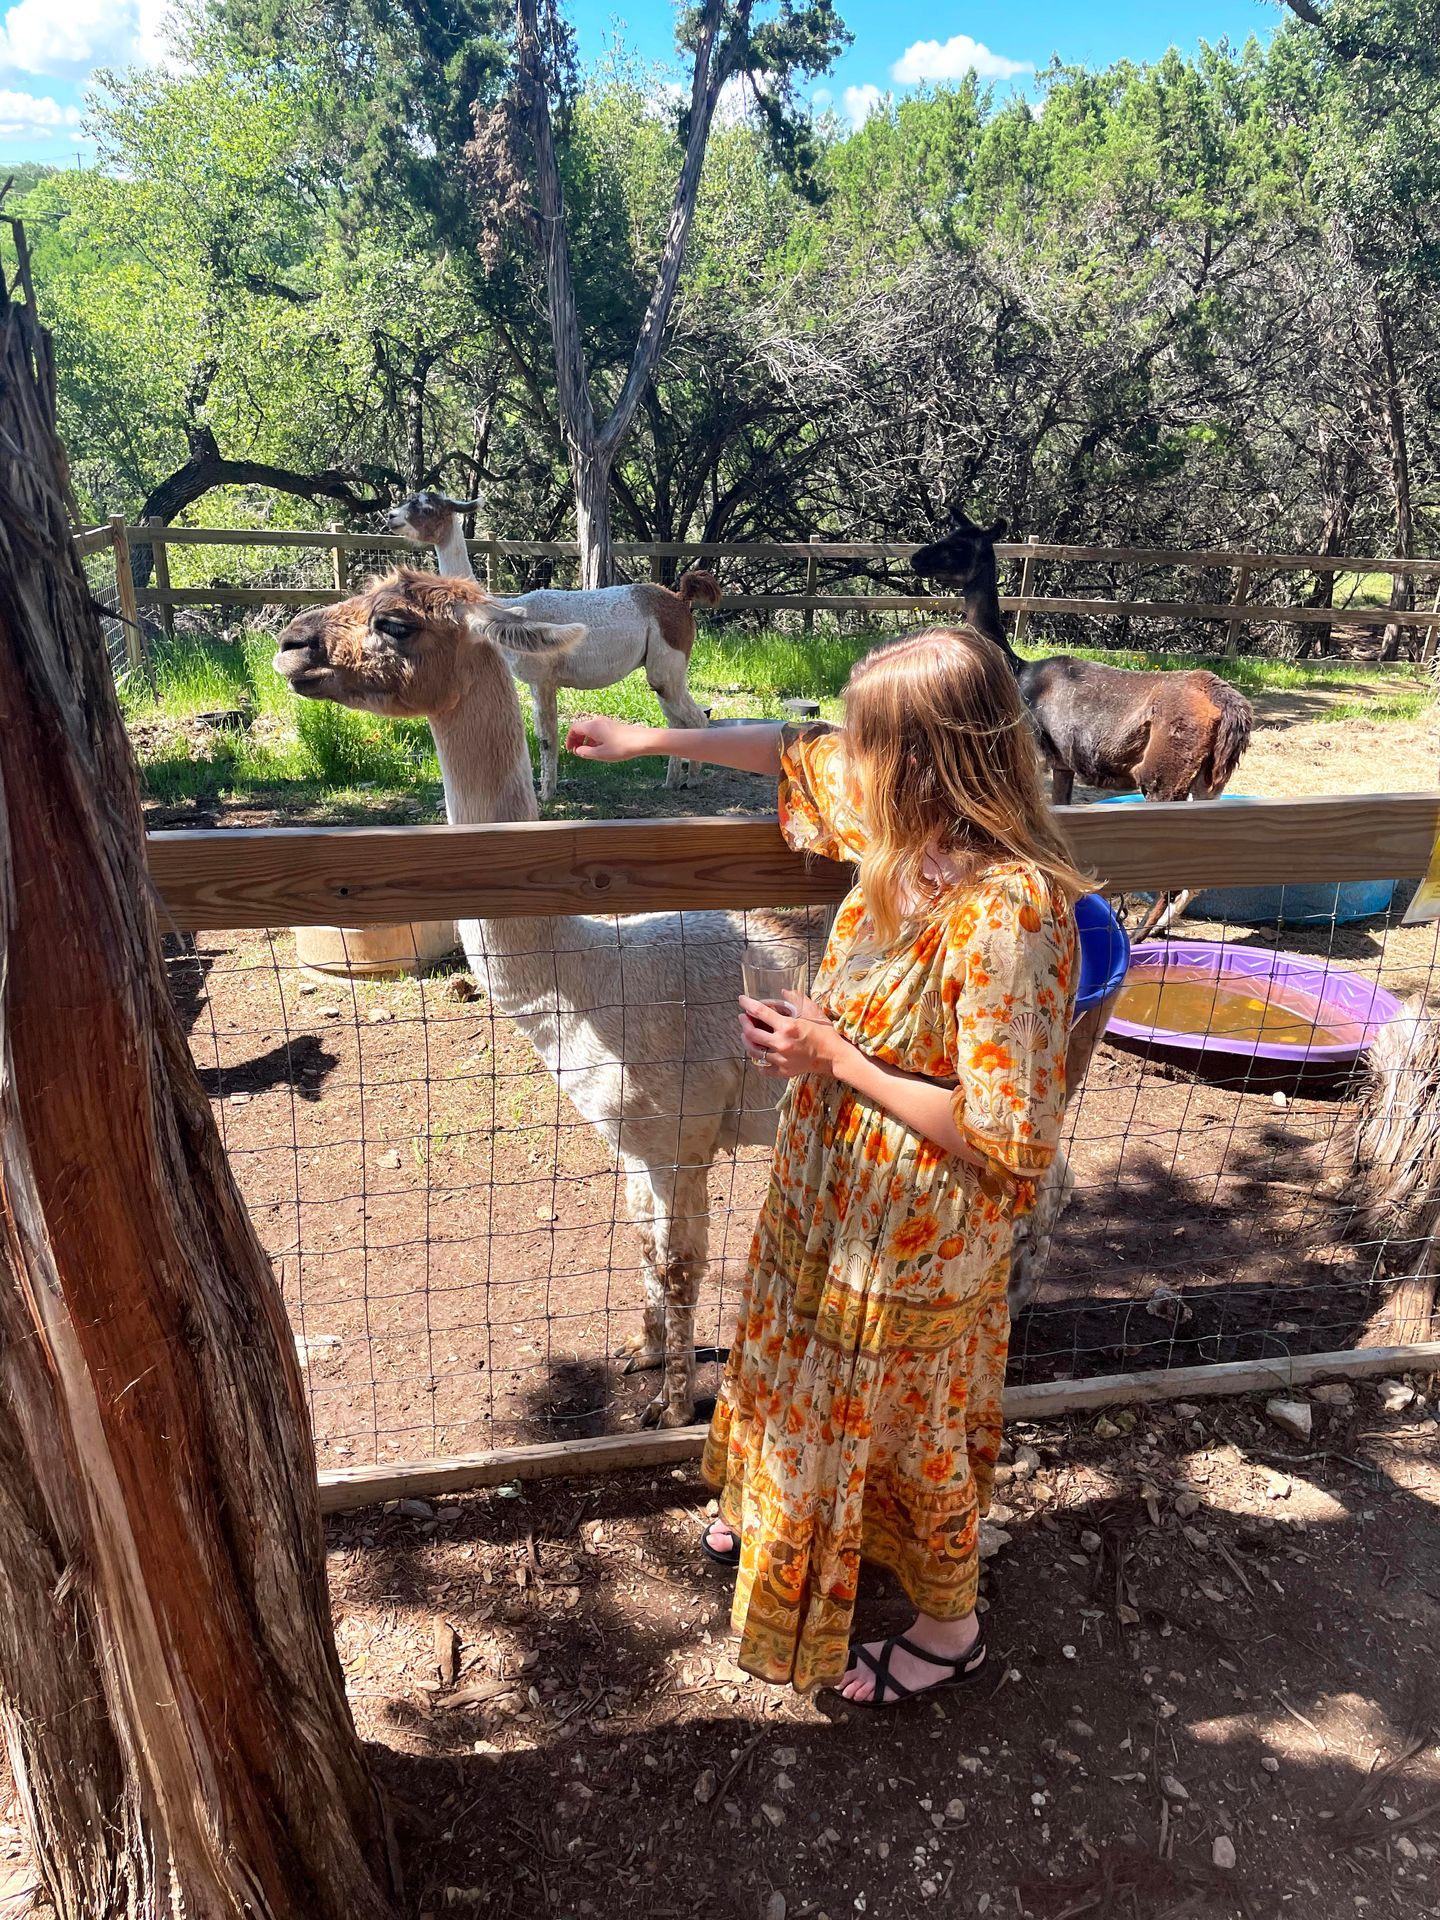 Lydia in a yellow dress reaching out to pet a llama at the Shady Llama